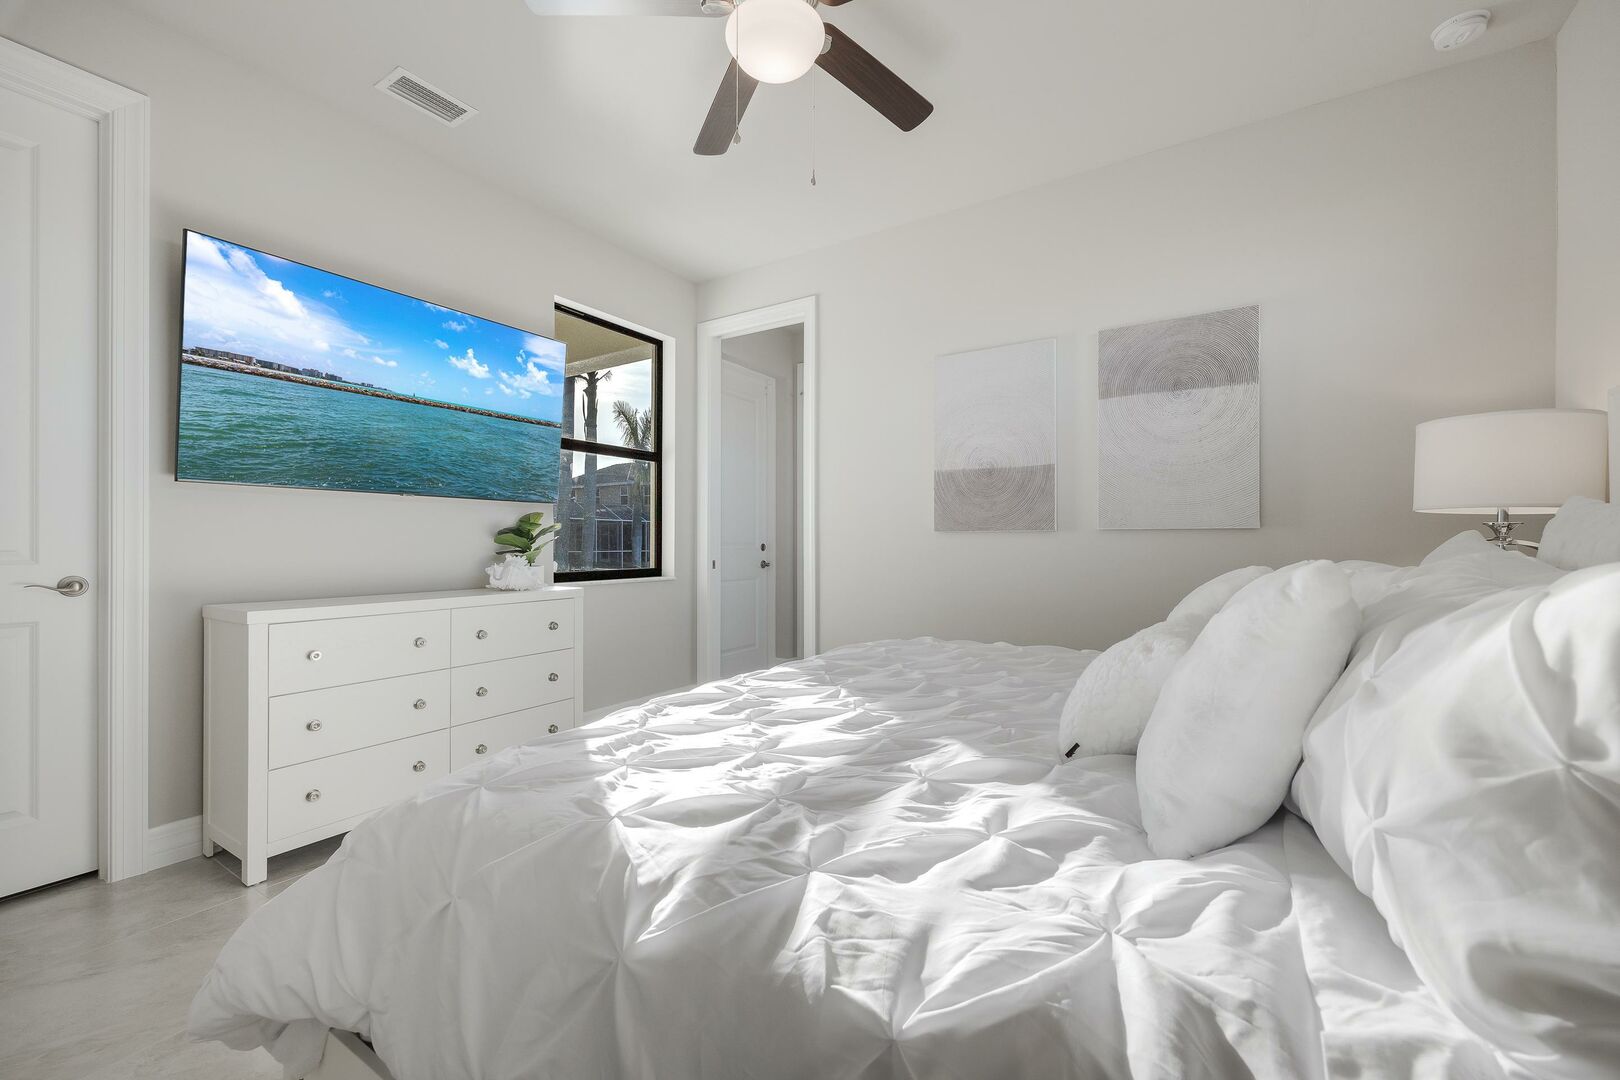 3 bedroom vacation rental Cape Coral FL